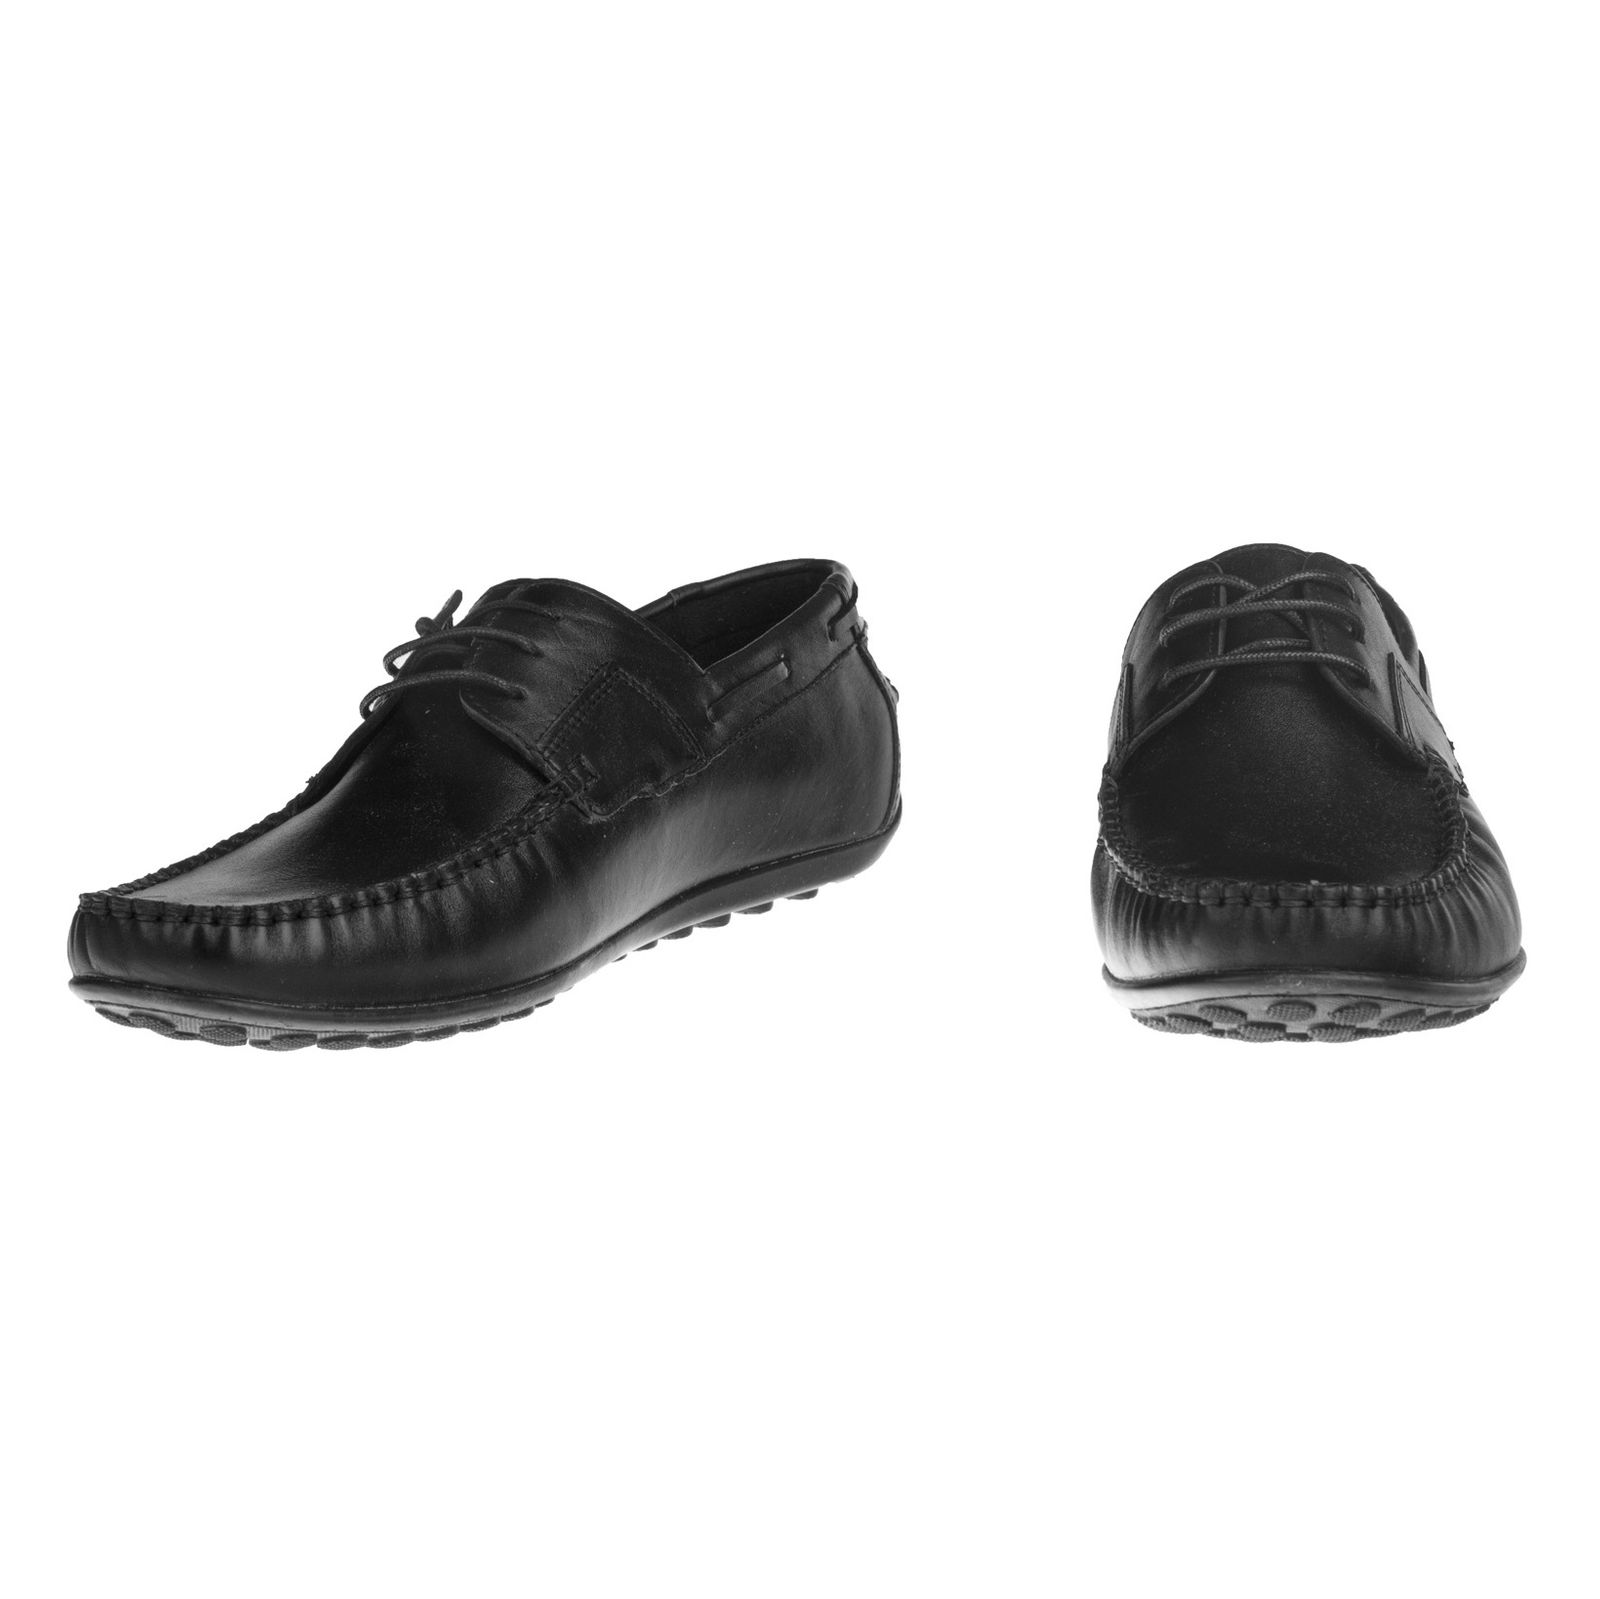 کفش روزمره مردانه بلوط مدل 7126G503-101 - مشکی - 4